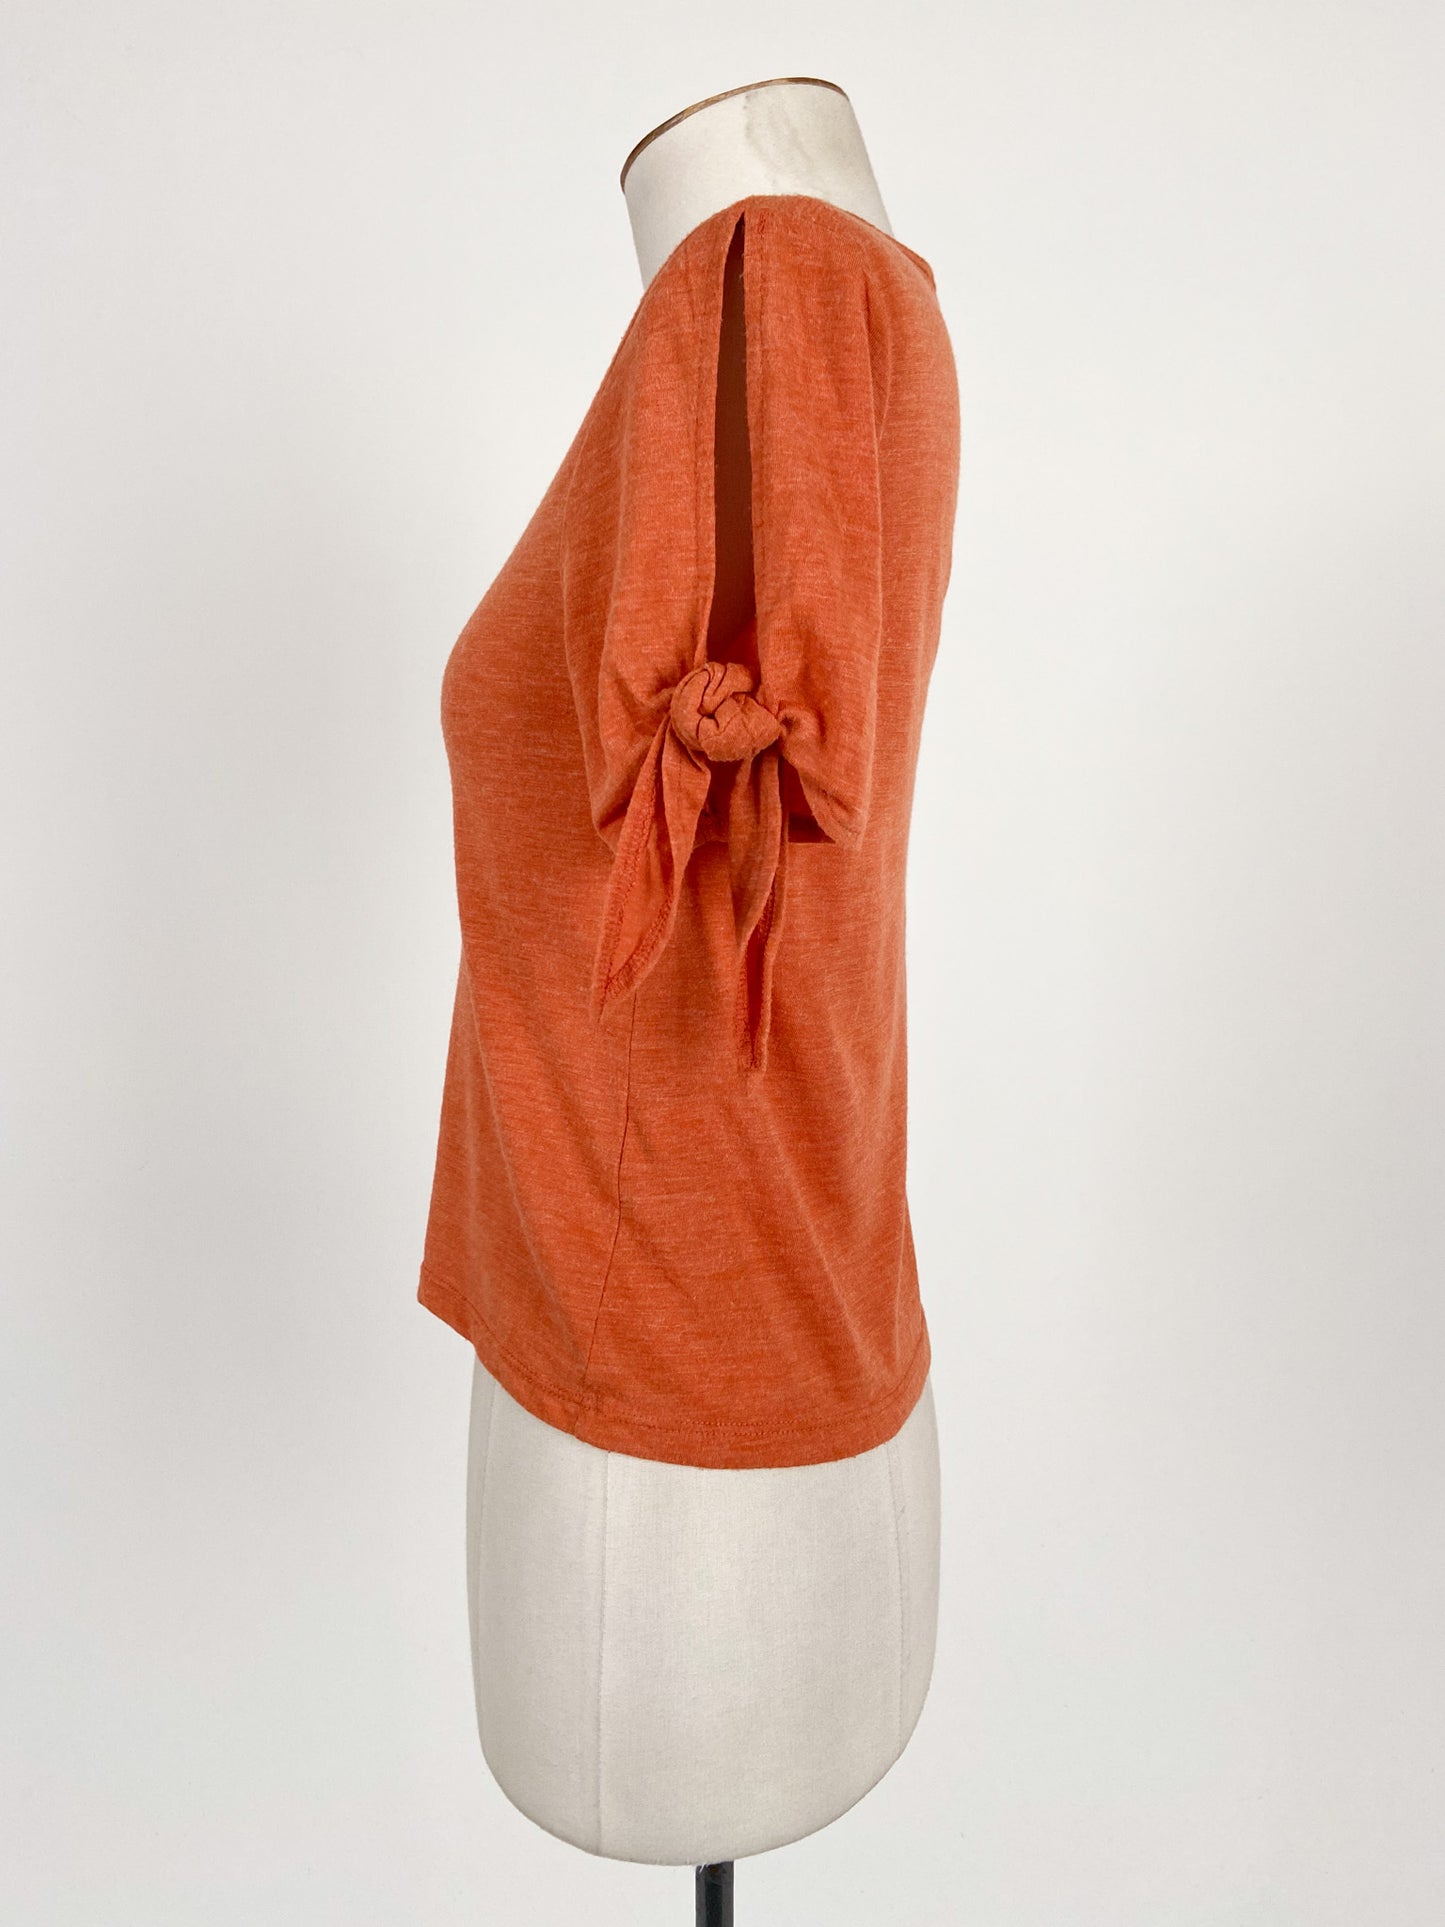 Zara | Orange Casual/Workwear Top | Size S